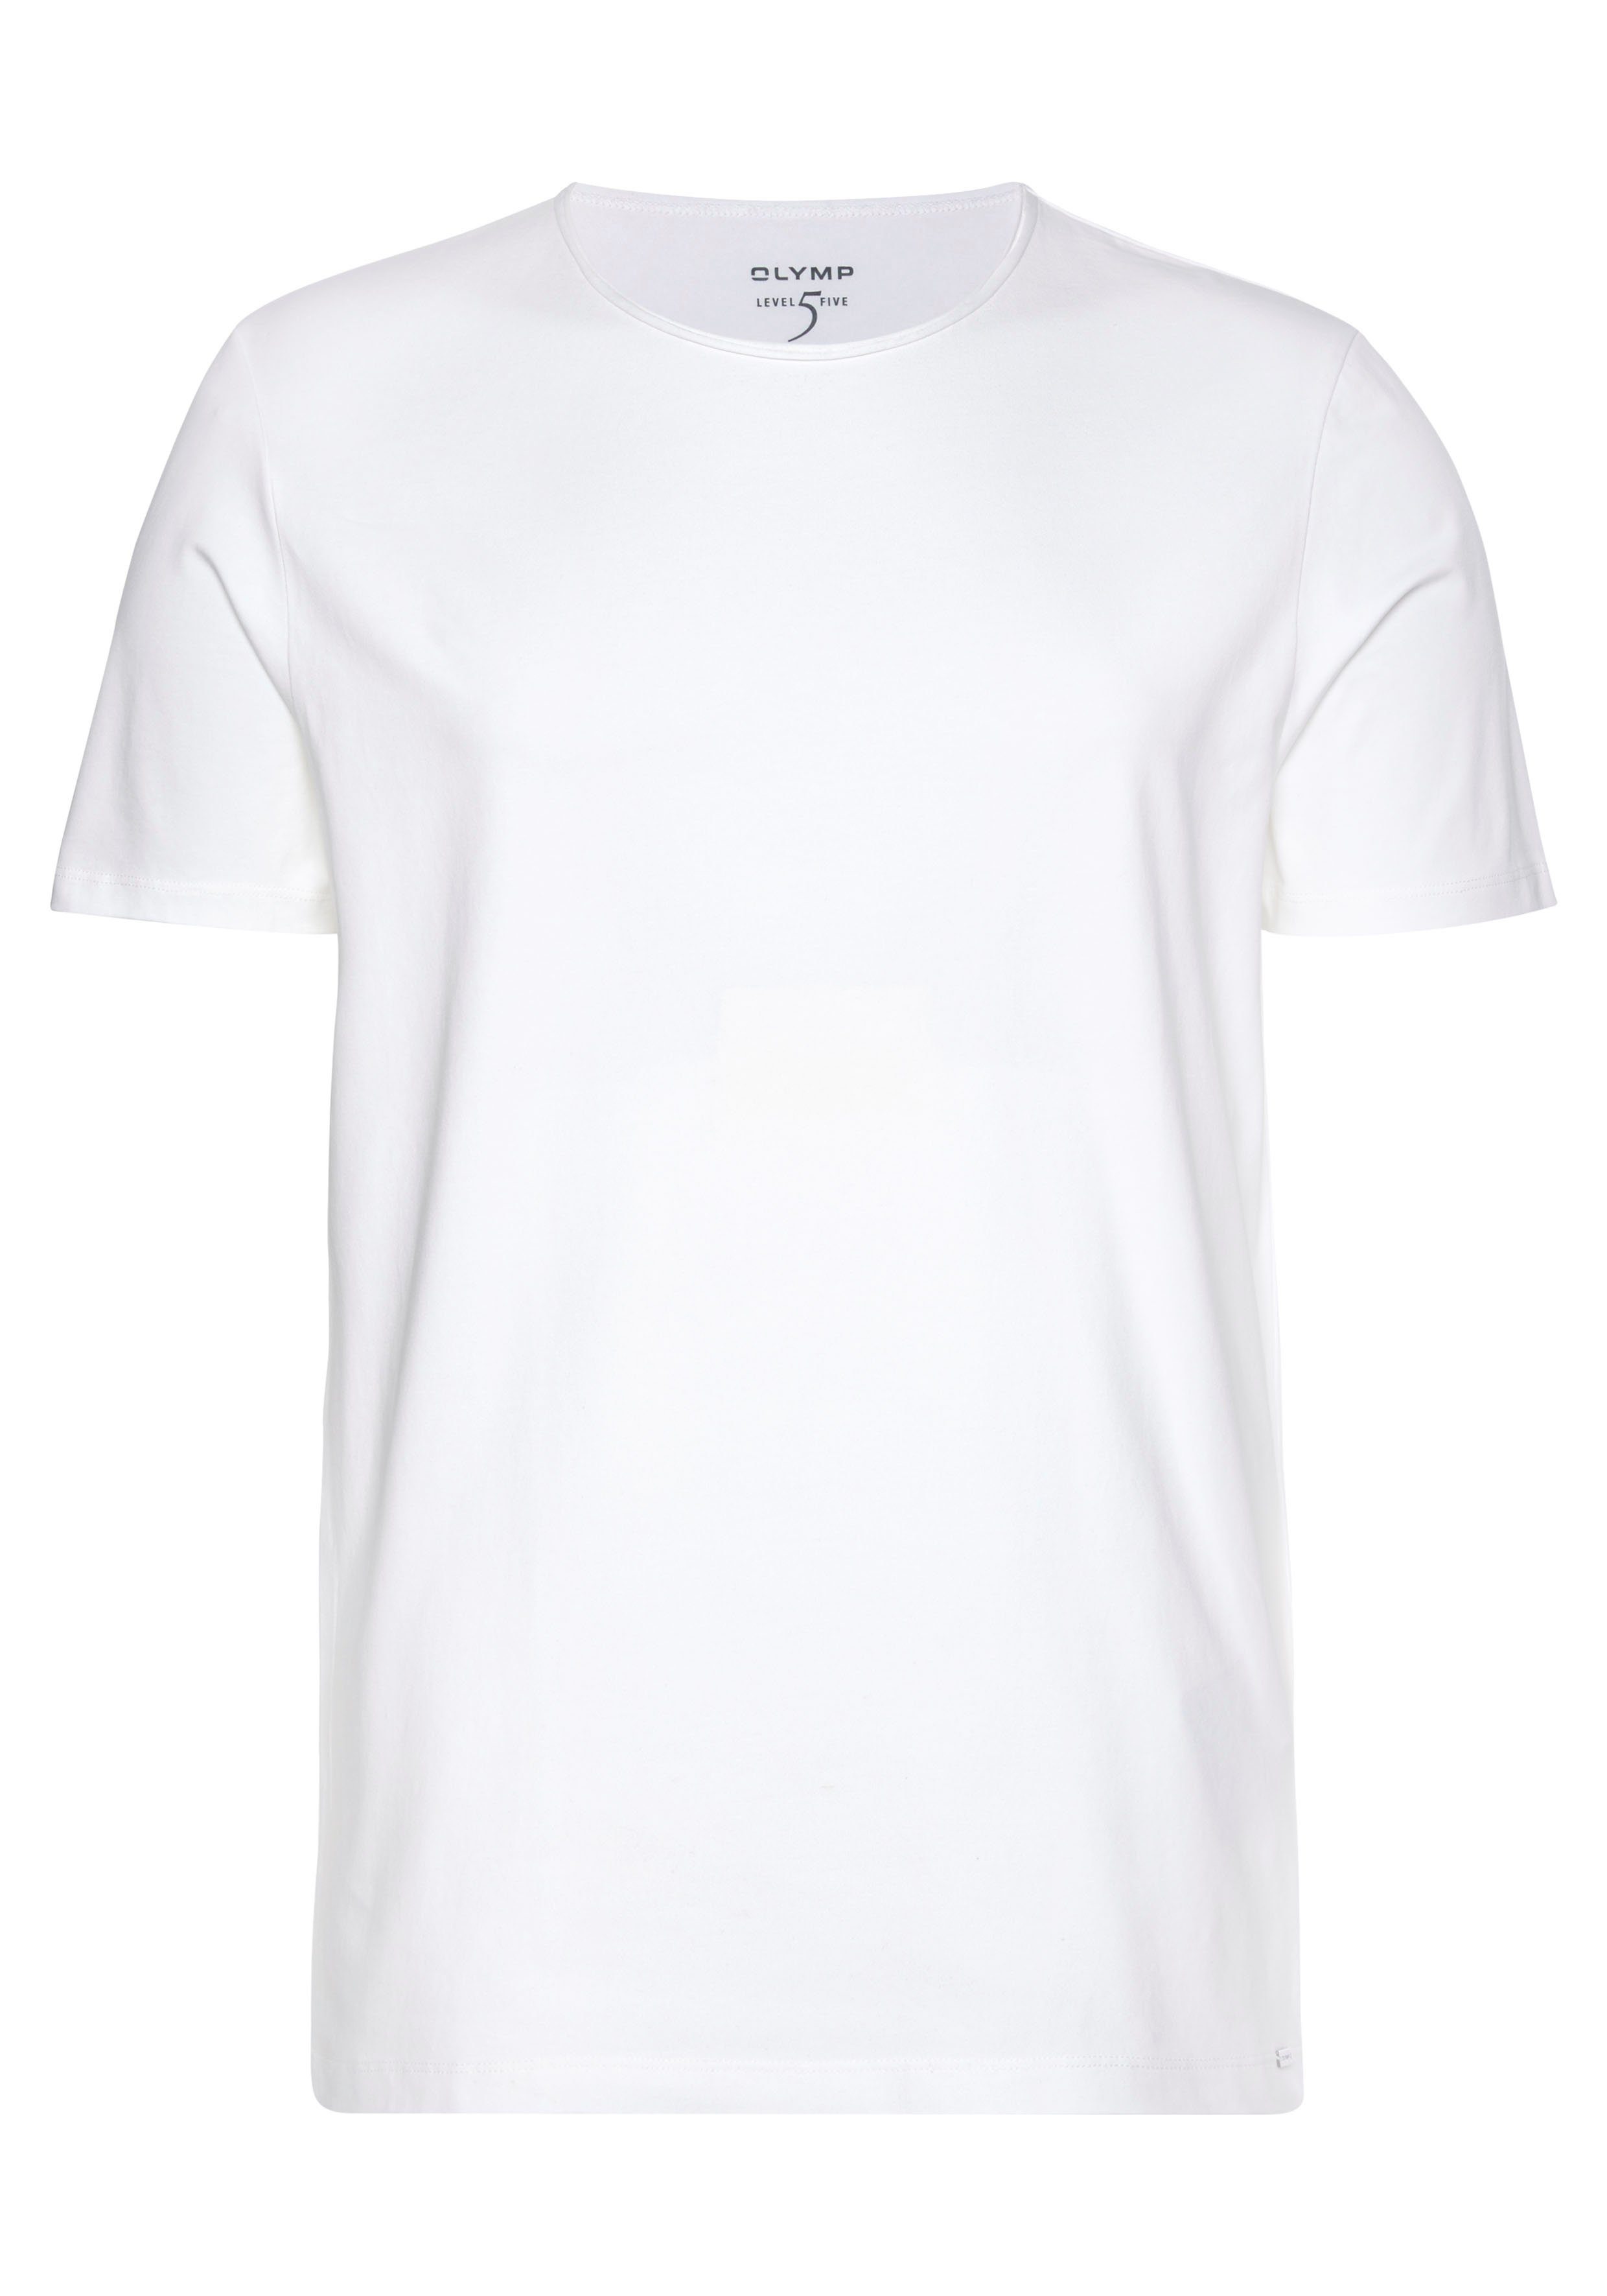 OLYMP T-Shirt Jersey body feinem aus fit Five weiß Level